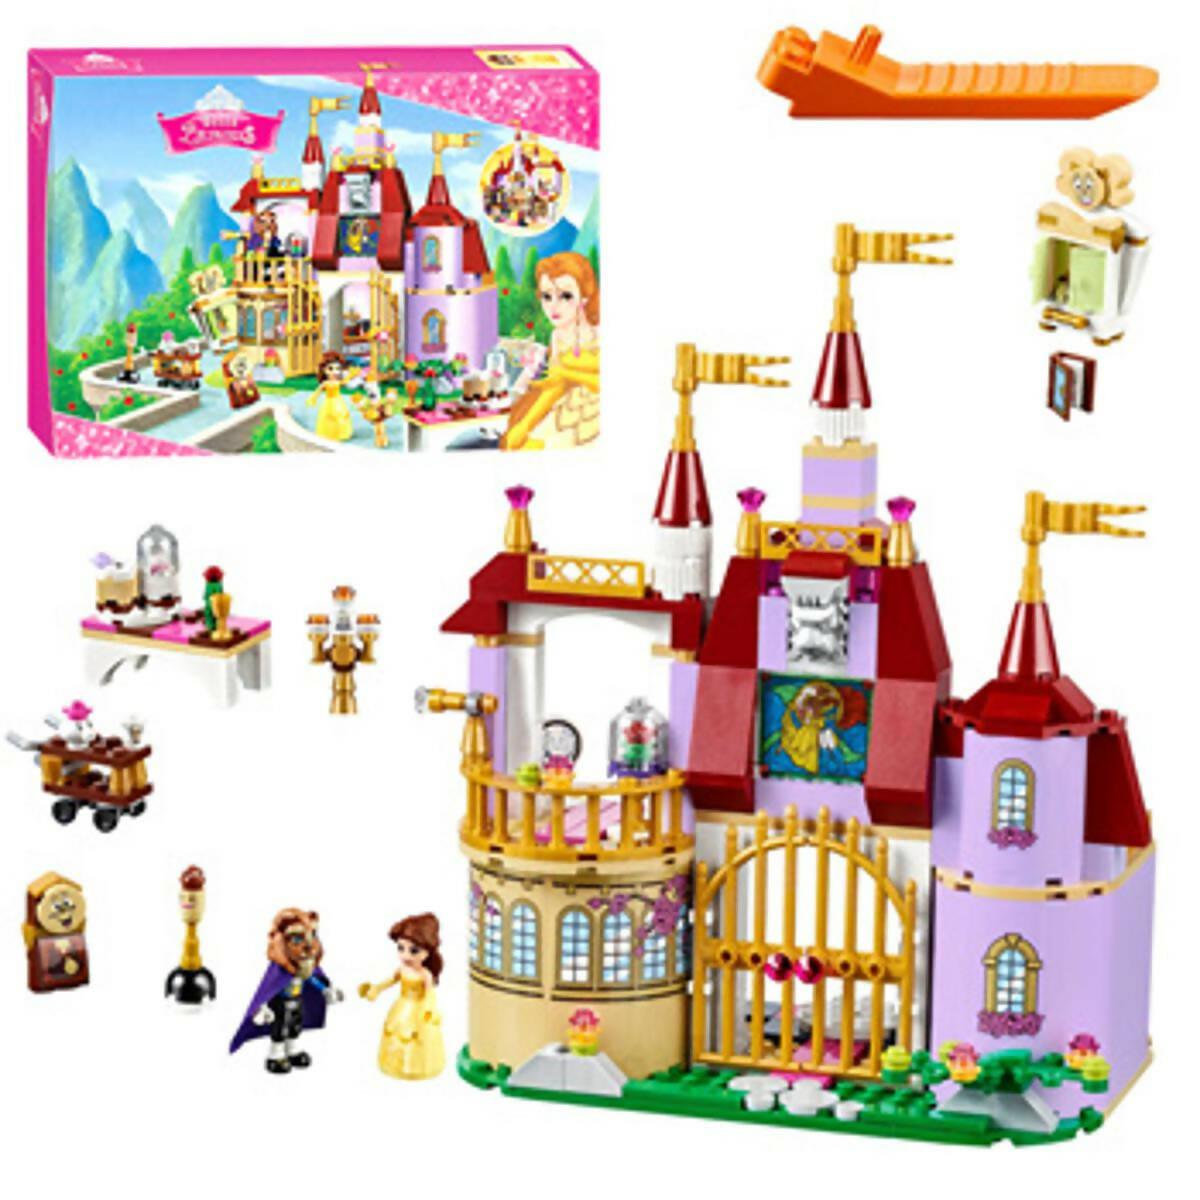 Disney Princess: Sleeping Beauty Belle's Enchanted Castle Building Blocks - 10565 - ValueBox